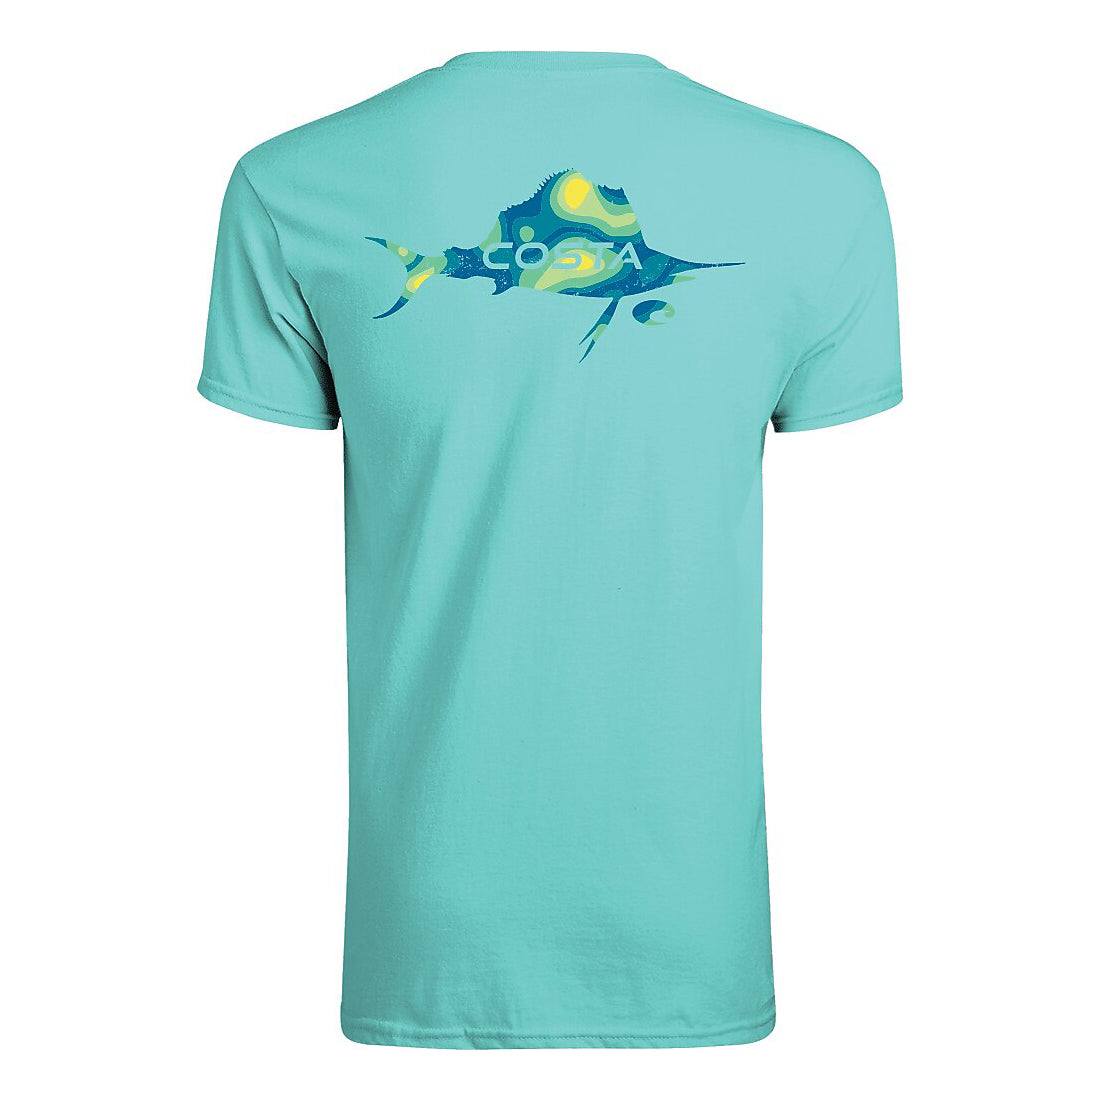 Costa Radar Sailfish Men's Short Sleeve Shirt from COSTA - CHAOS Fishing